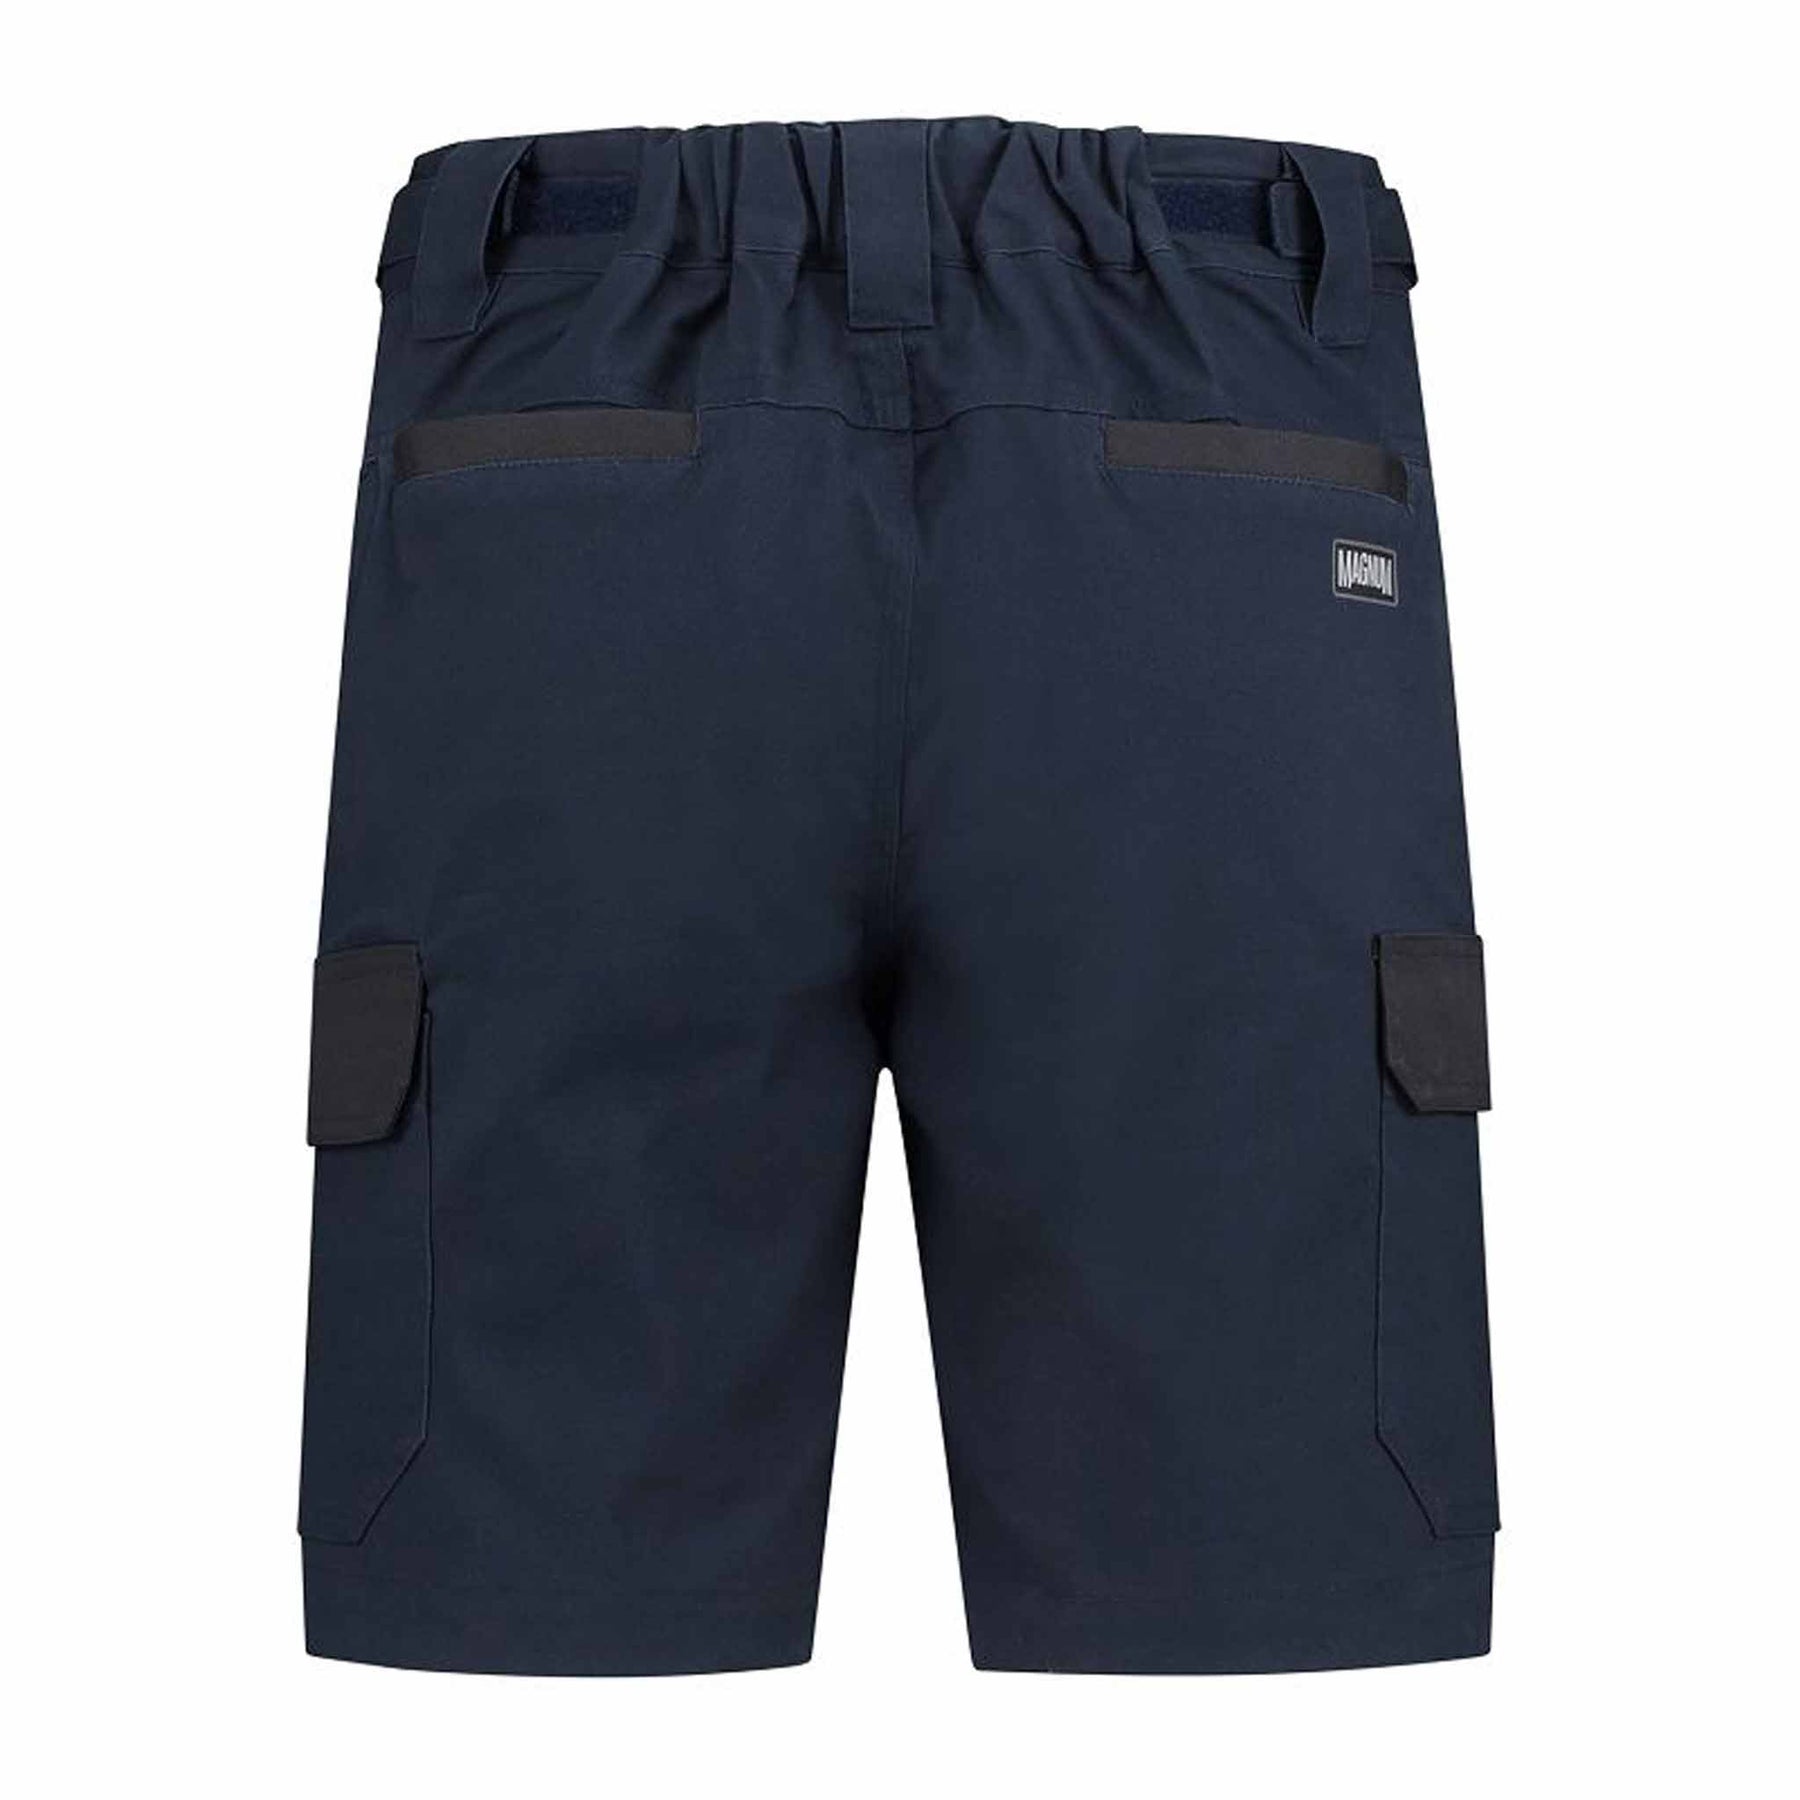 navy shorts 247 series back view